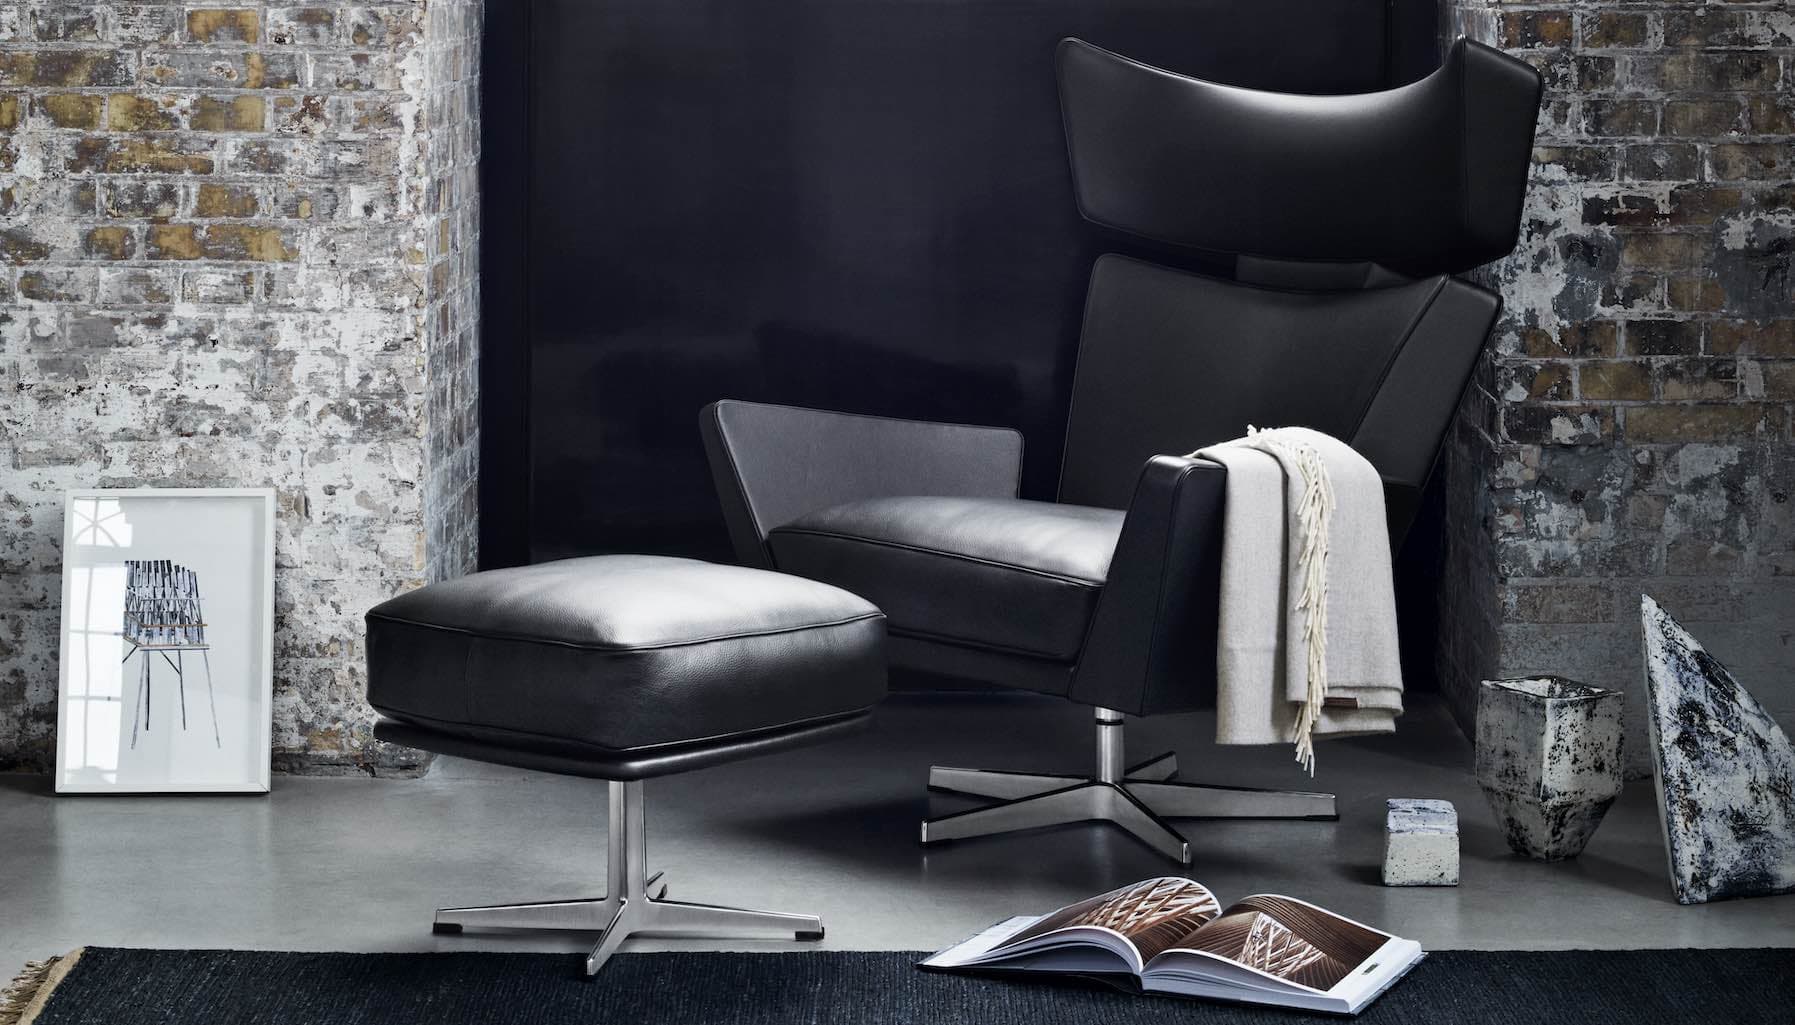 Chiếc ghế tựa Oksen thiết kế bởi Arne Jacobsen